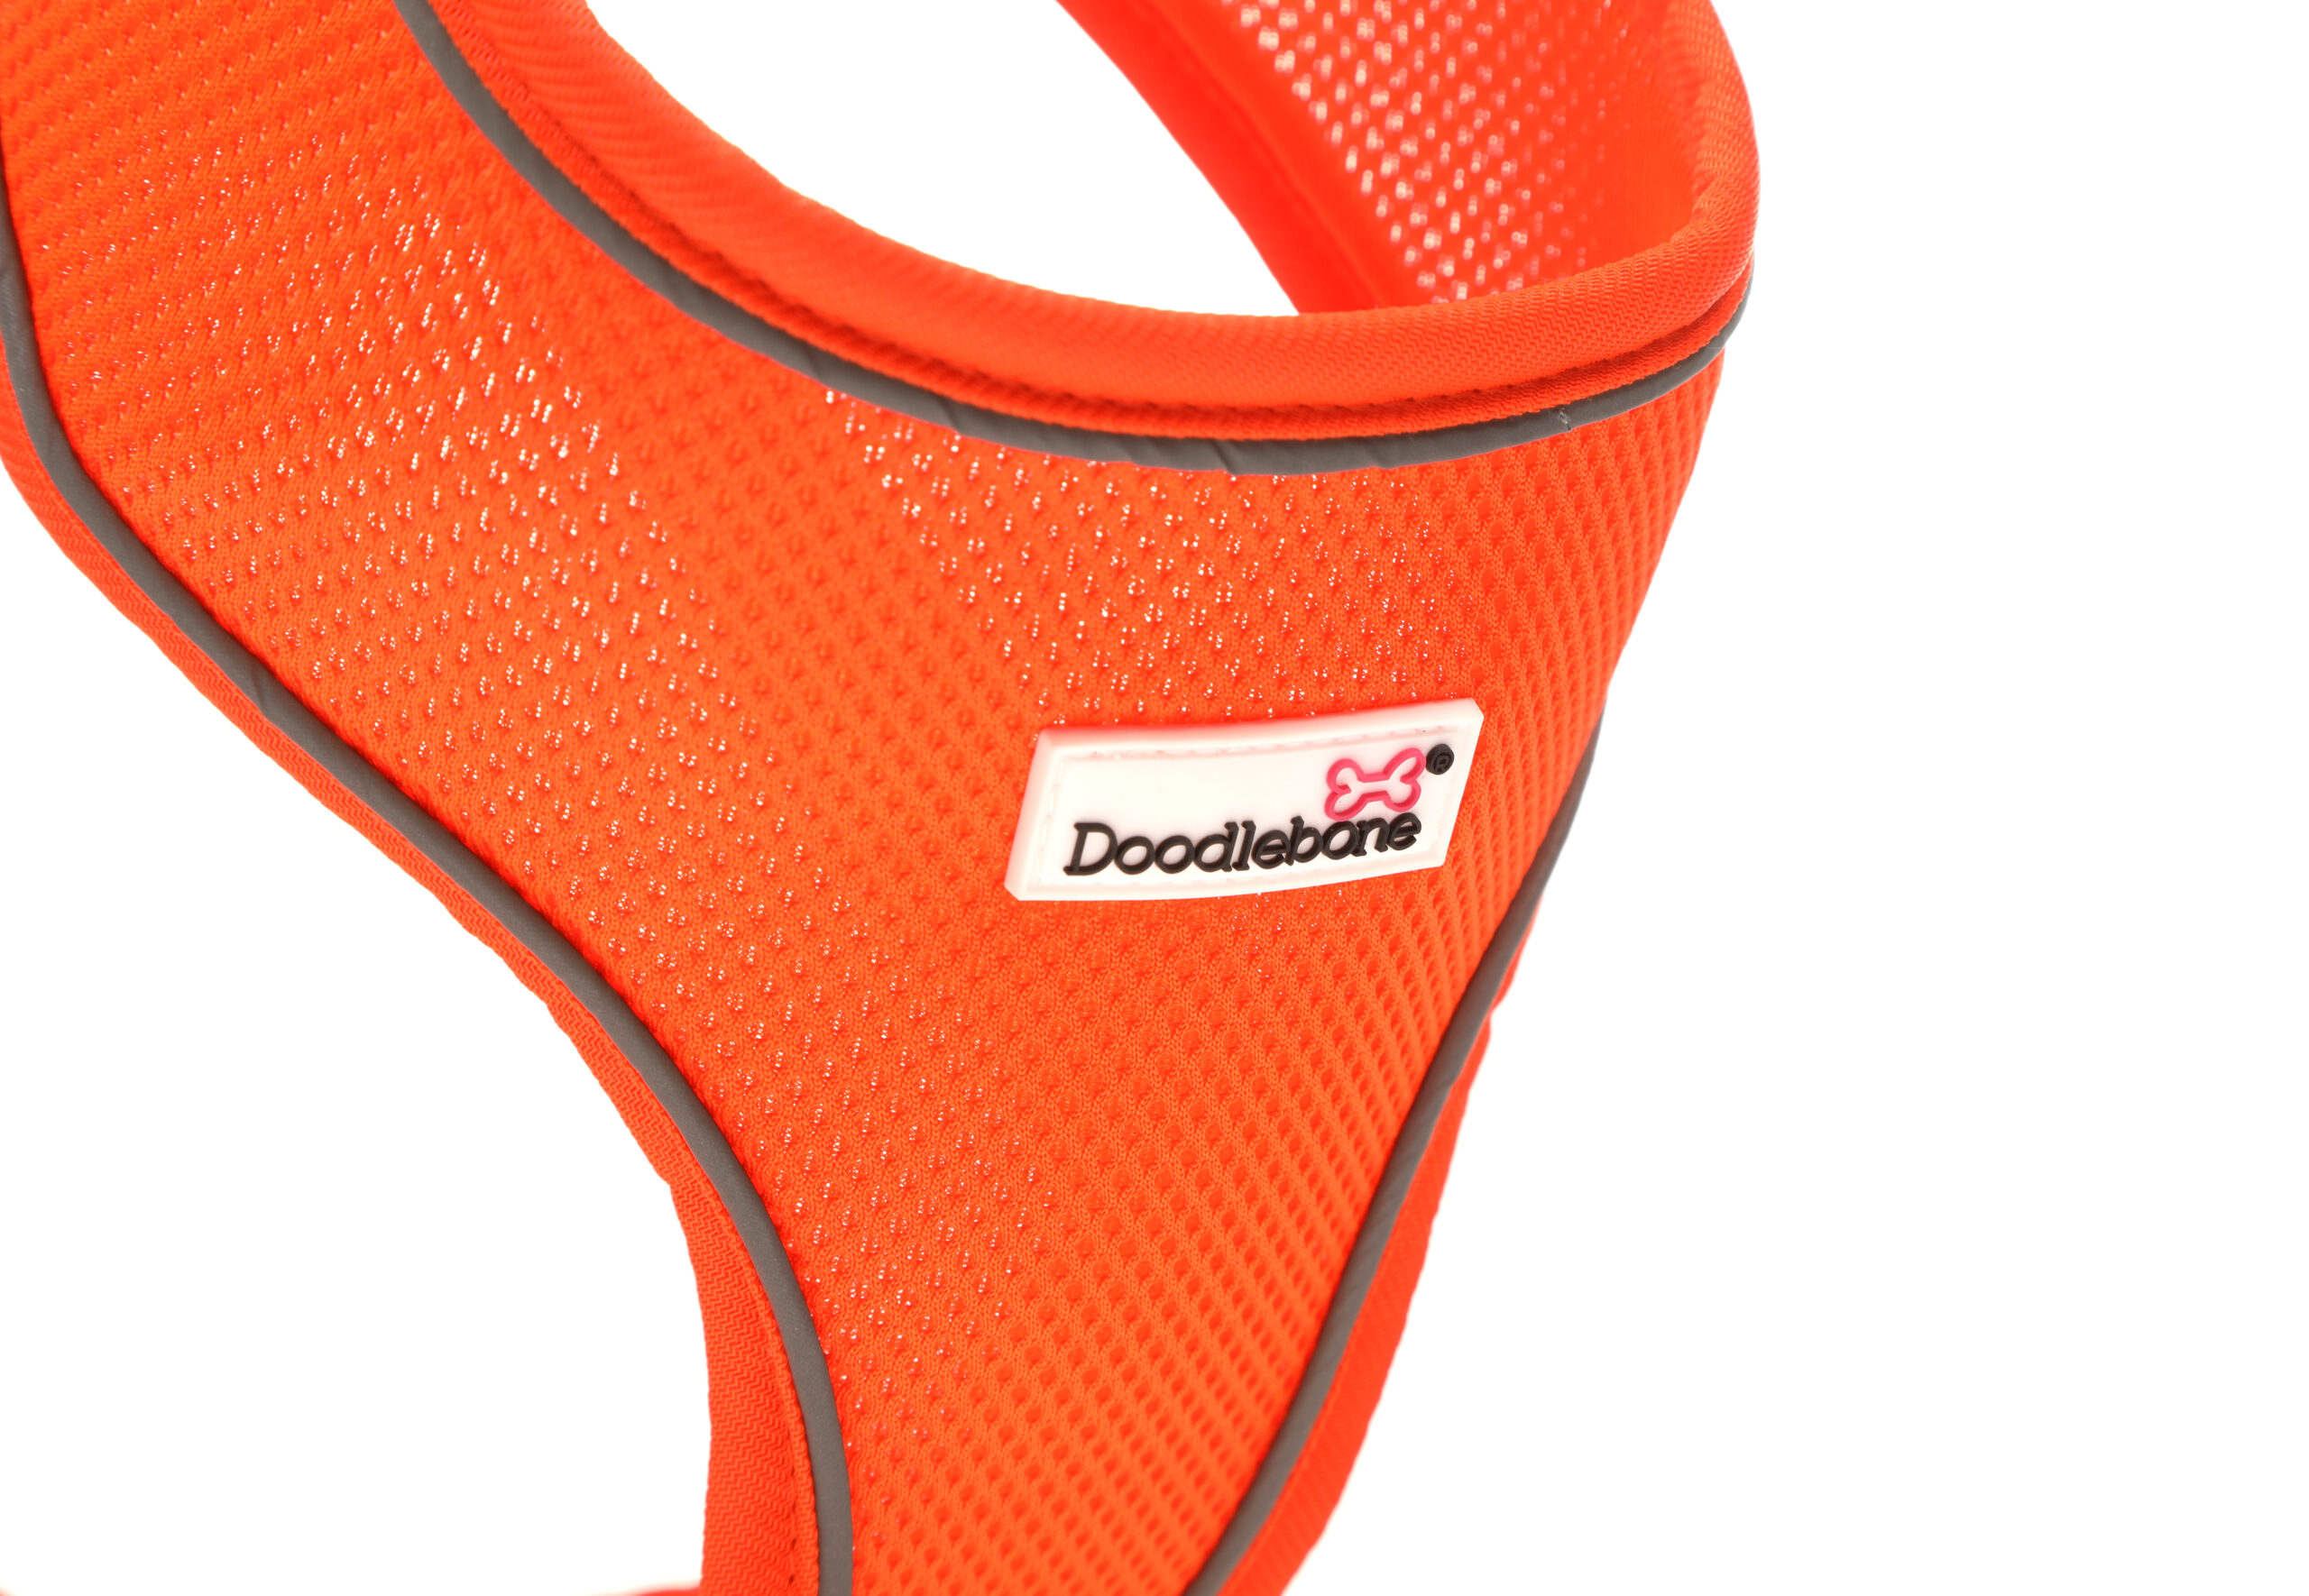 Doodlebone Orange Airmesh Dog Harness